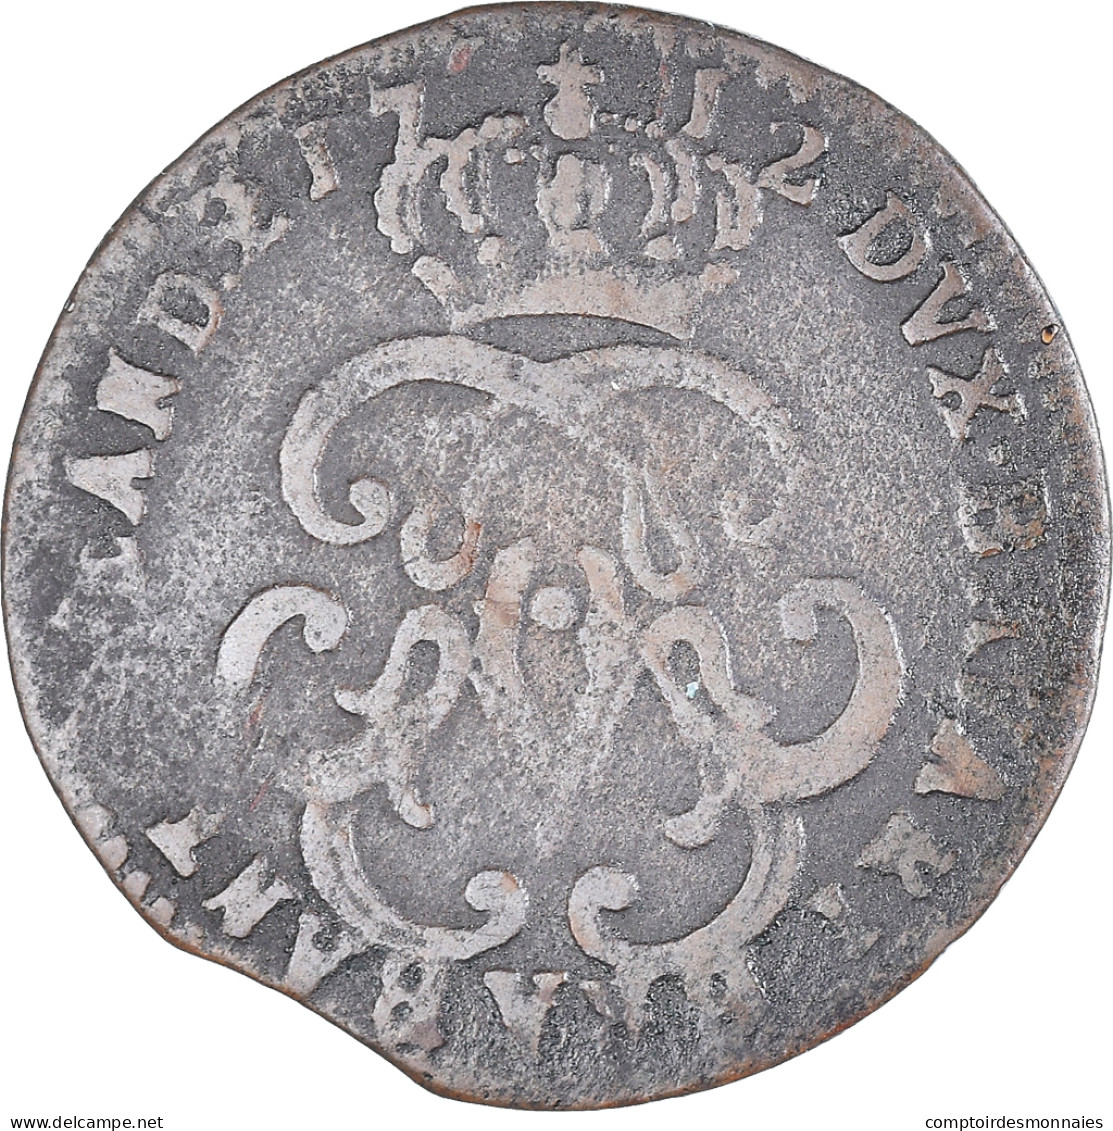 Monnaie, Pays-Bas Espagnols, NAMUR, Maximilian Emmanuel Of Bavaria, Liard, 1712 - Spaanse Nederlanden